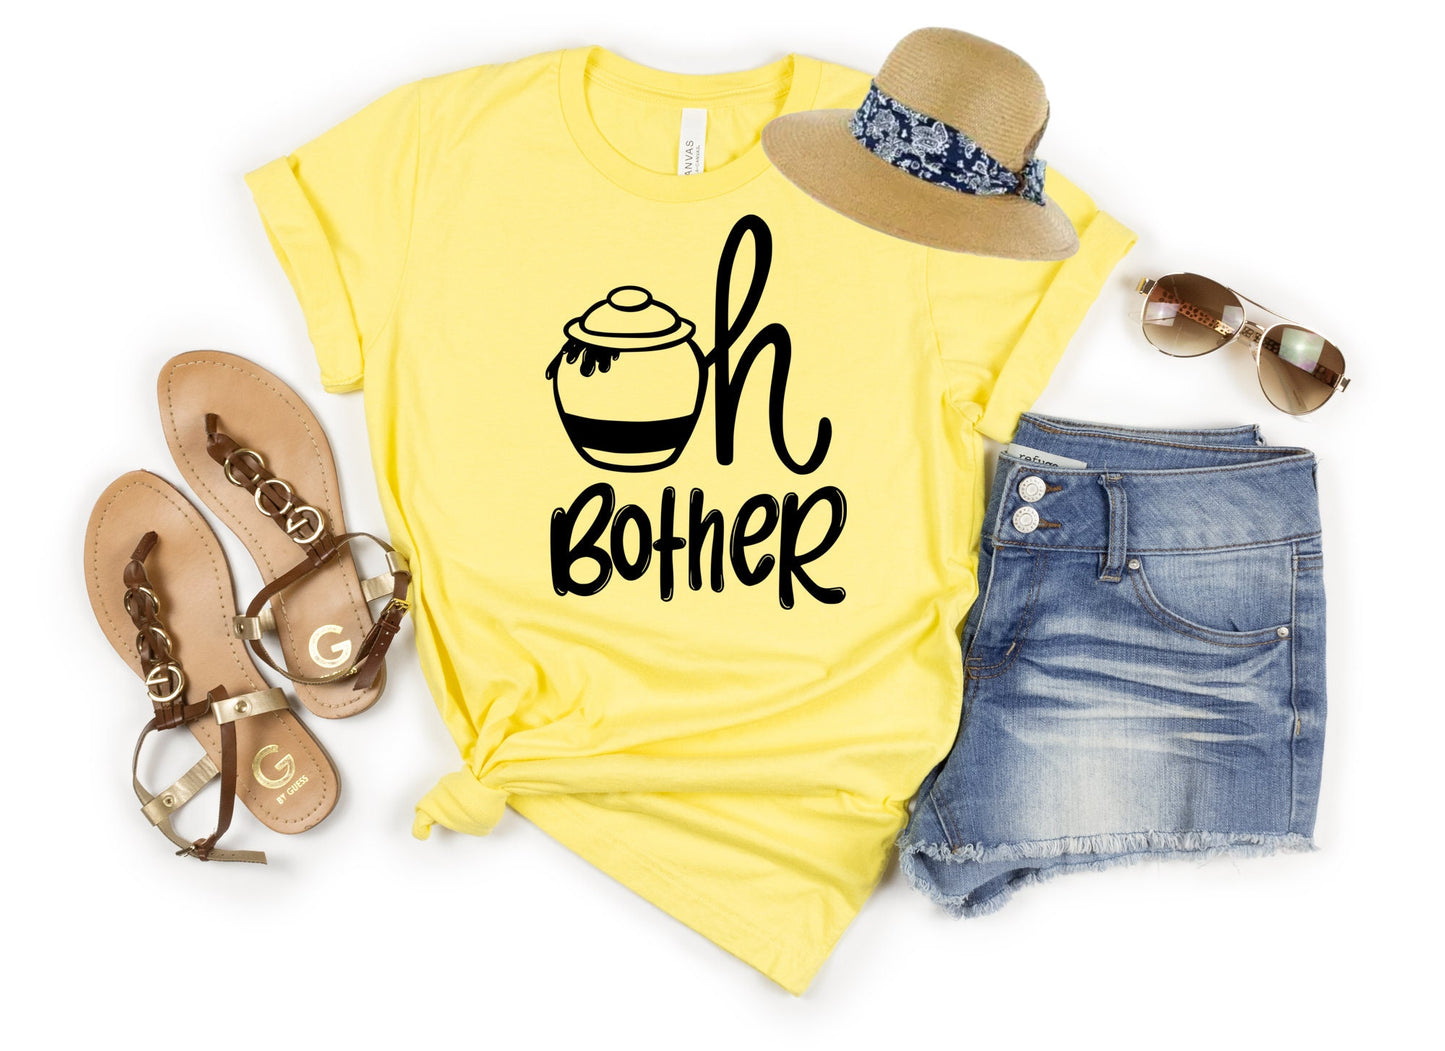 Oh Bother Shirt, Pooh Bear Shirt, Honey Pot Shirt, Pooh Shirt, Disney Shirts, Disney Trip Shirts, Disney Vacation, Disney Family Shirts